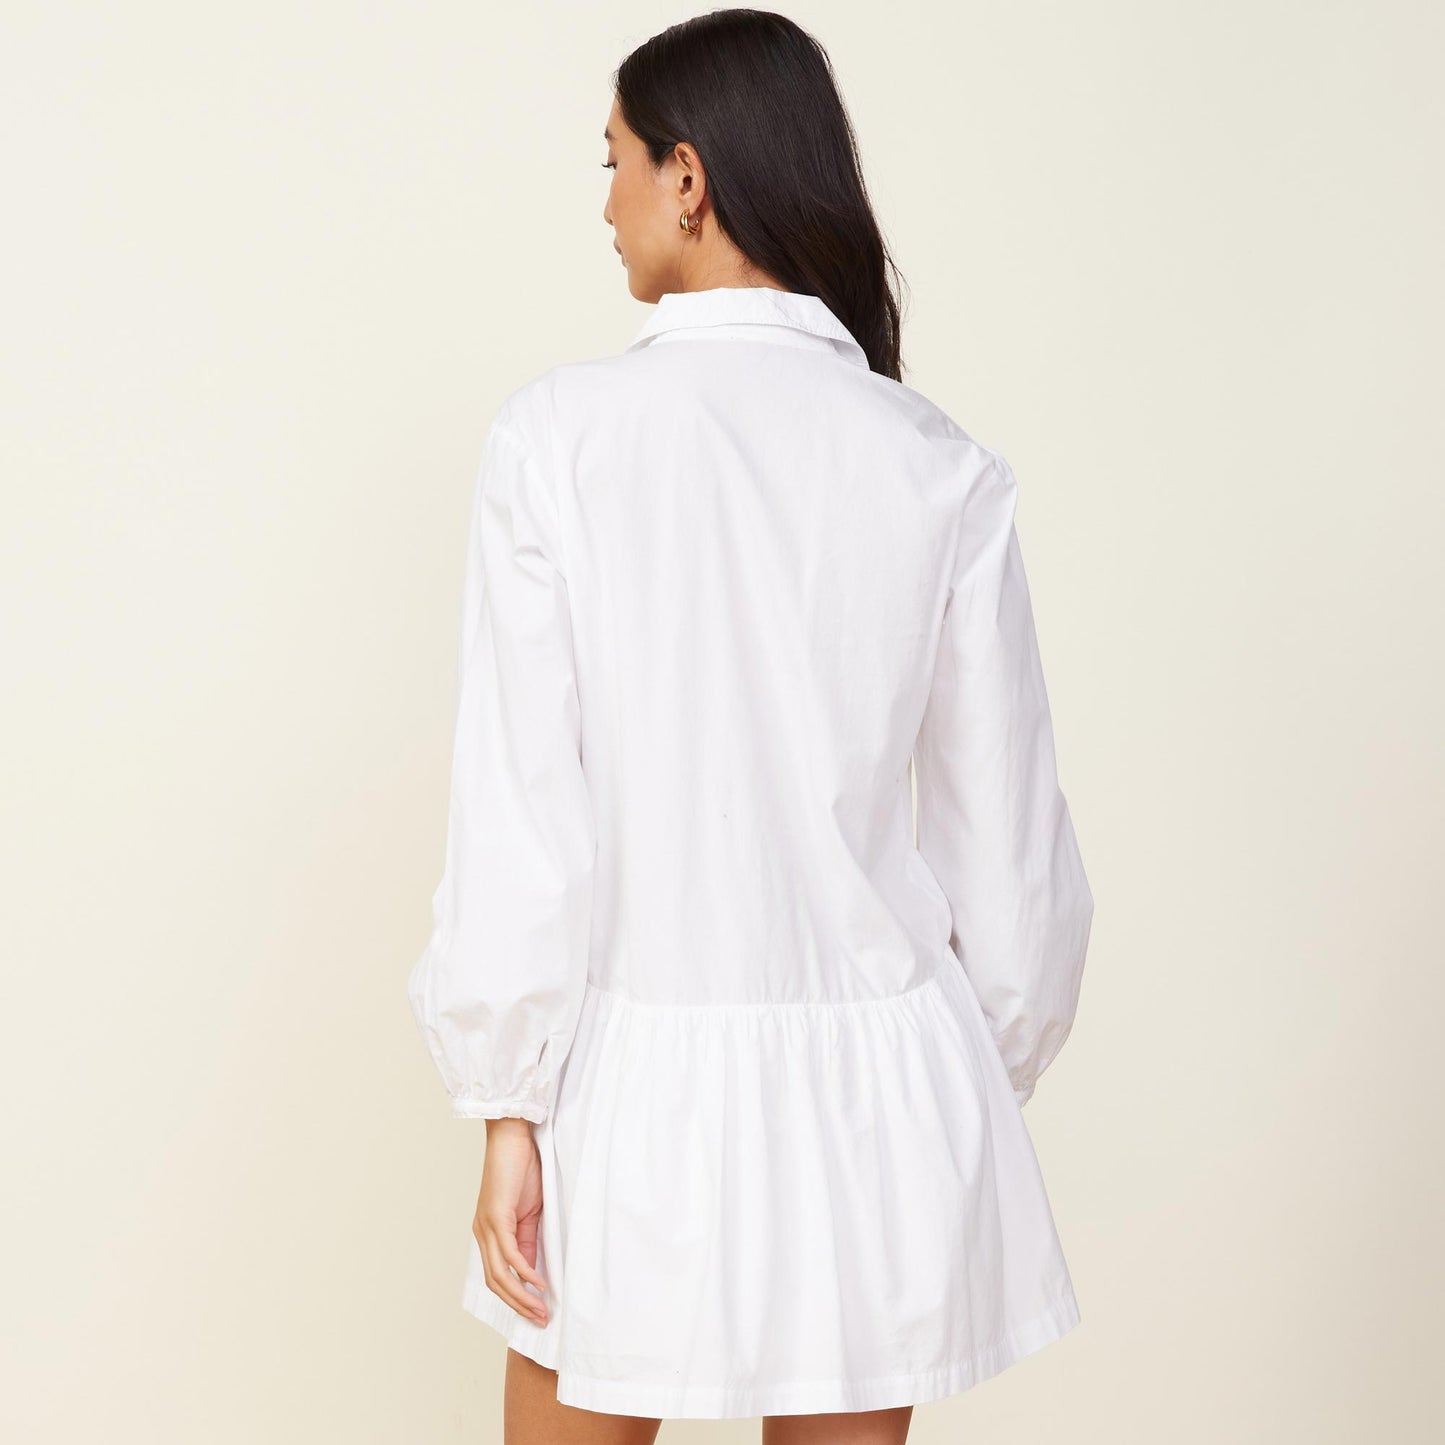 Back view of model wearing the poplin easy shirt dress in white.